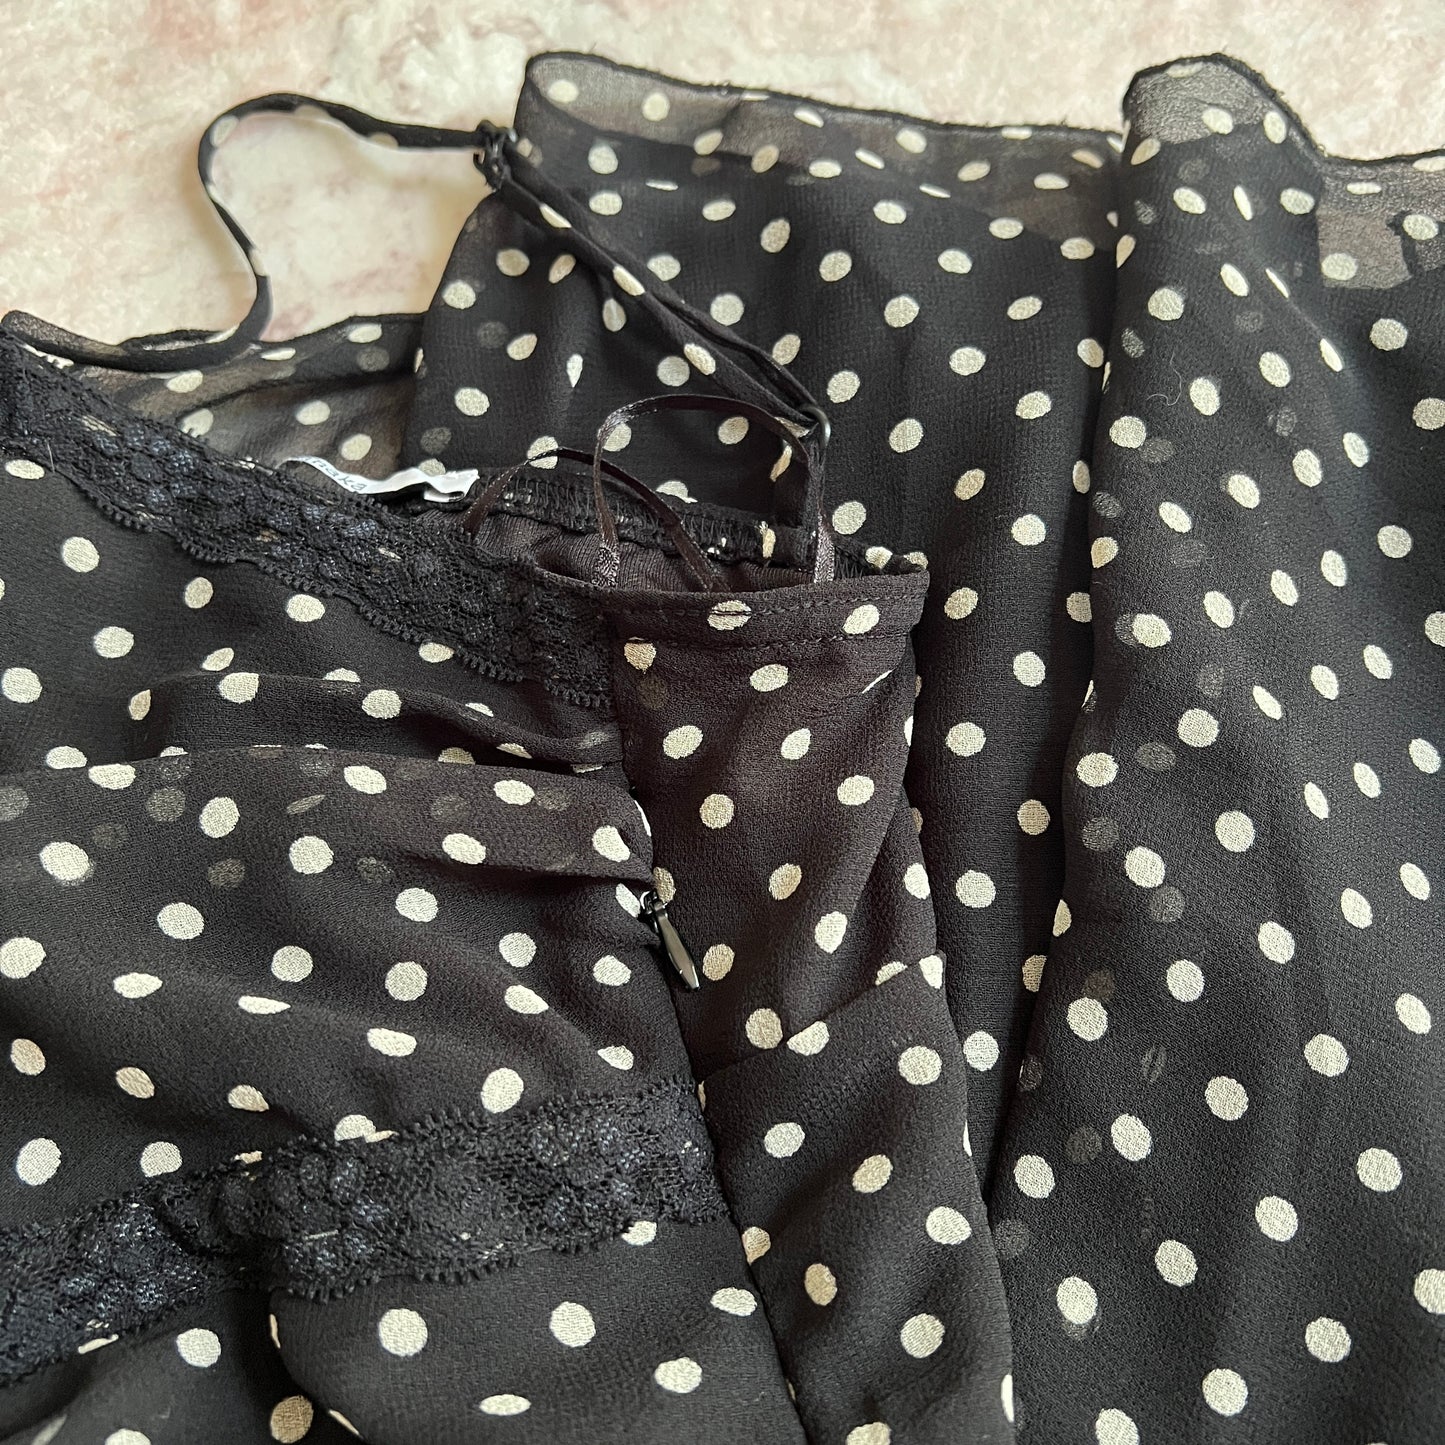 xanaka black polka dot midi dress 𐙚 36 (m)